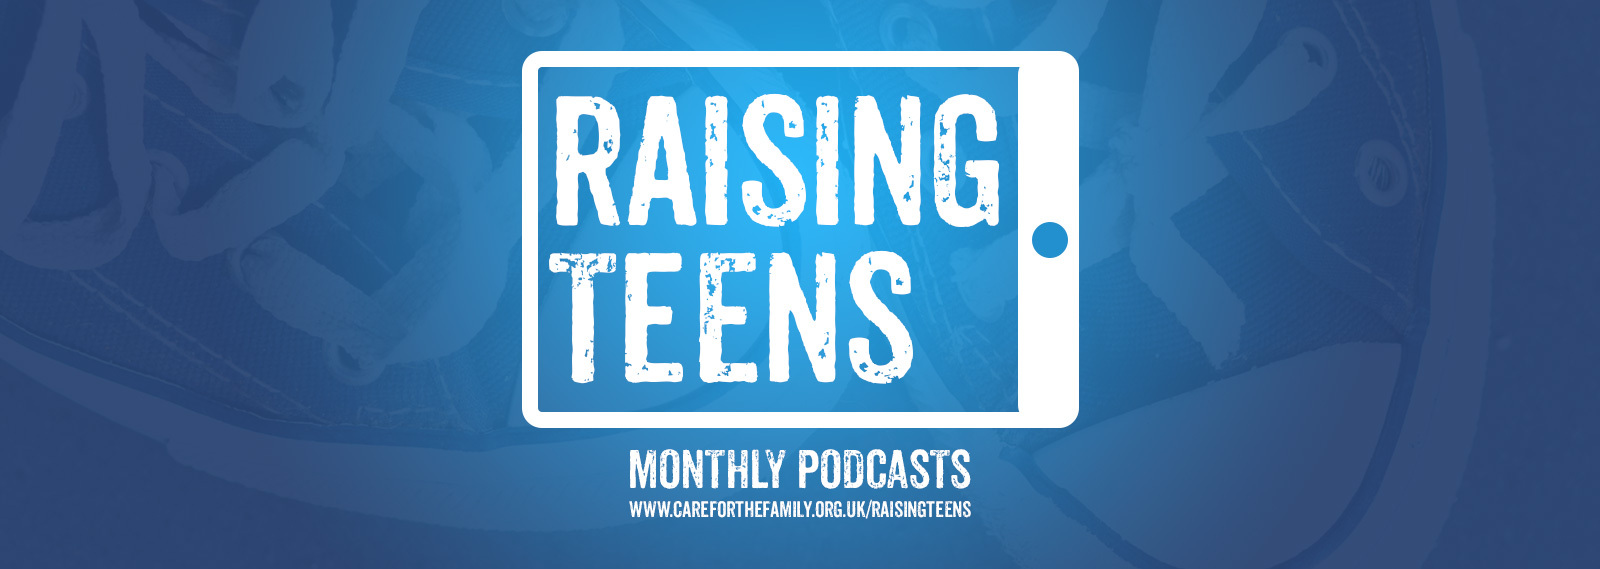 Raising Teens Podcast